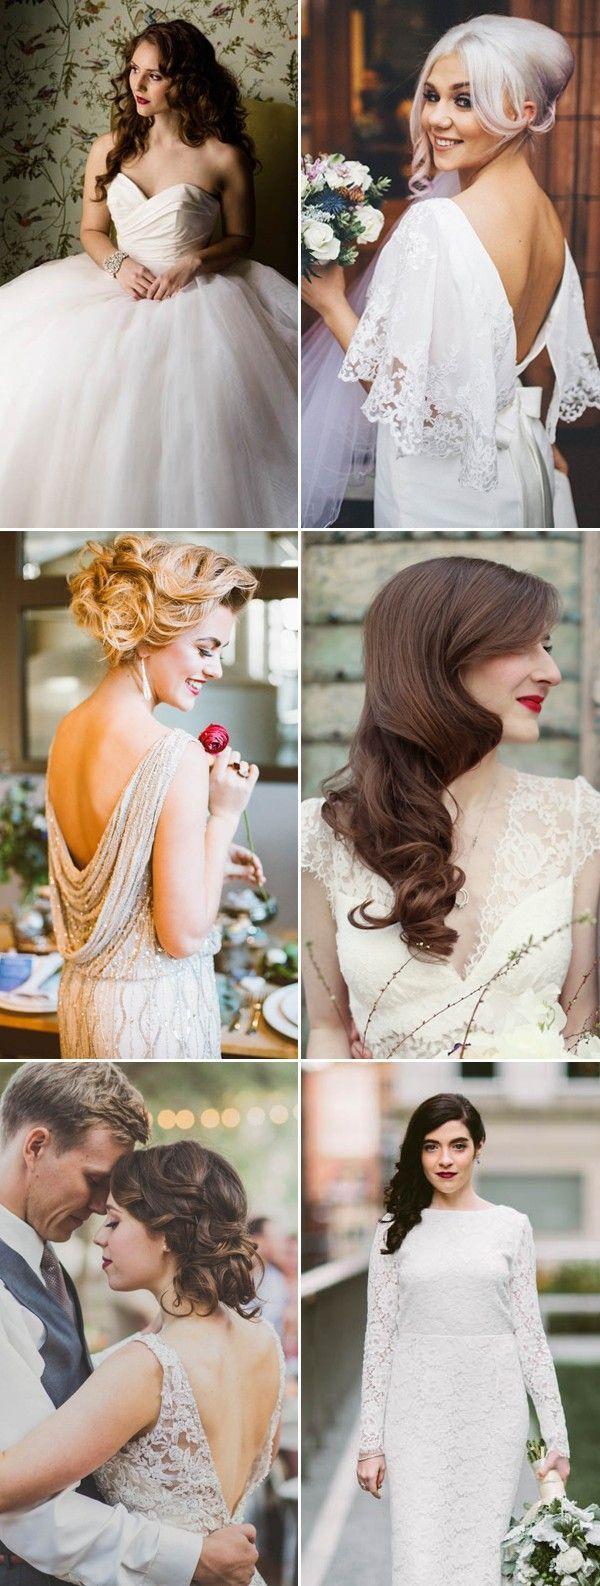 زفاف - How To Nail Your Vintage Bridal Style